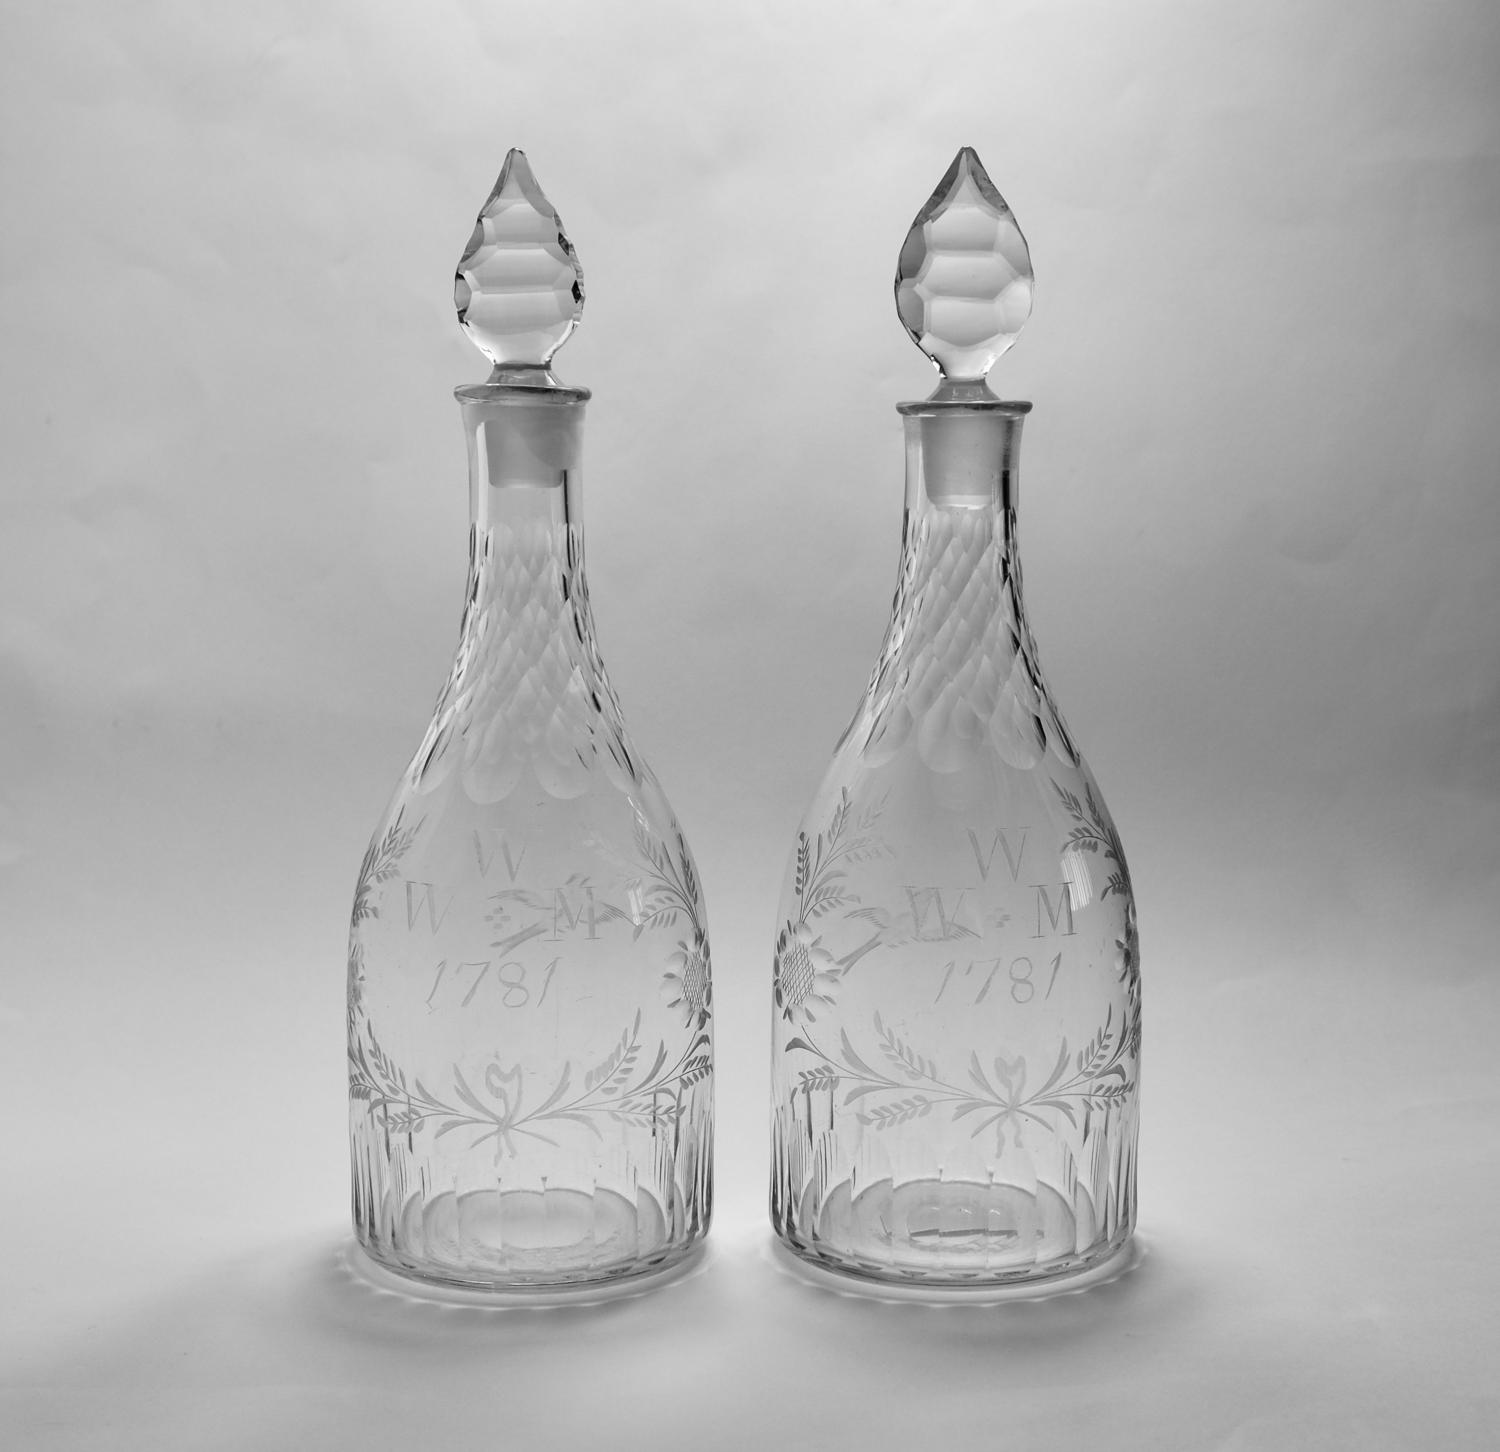 Pair of 18th century decanters